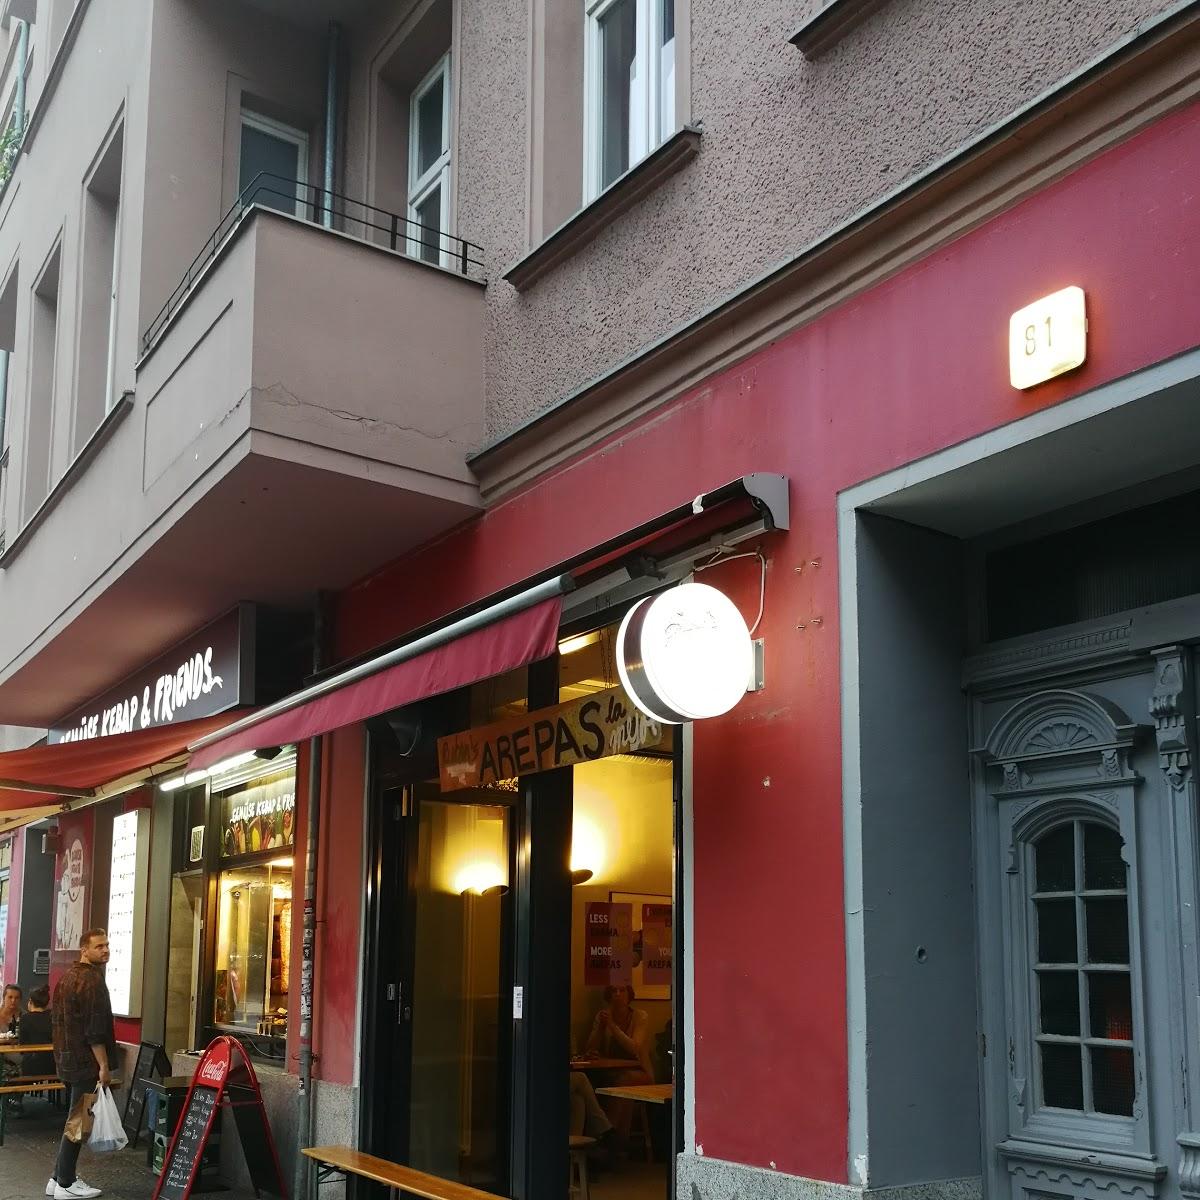 Restaurant "Rubens Arepas" in Berlin